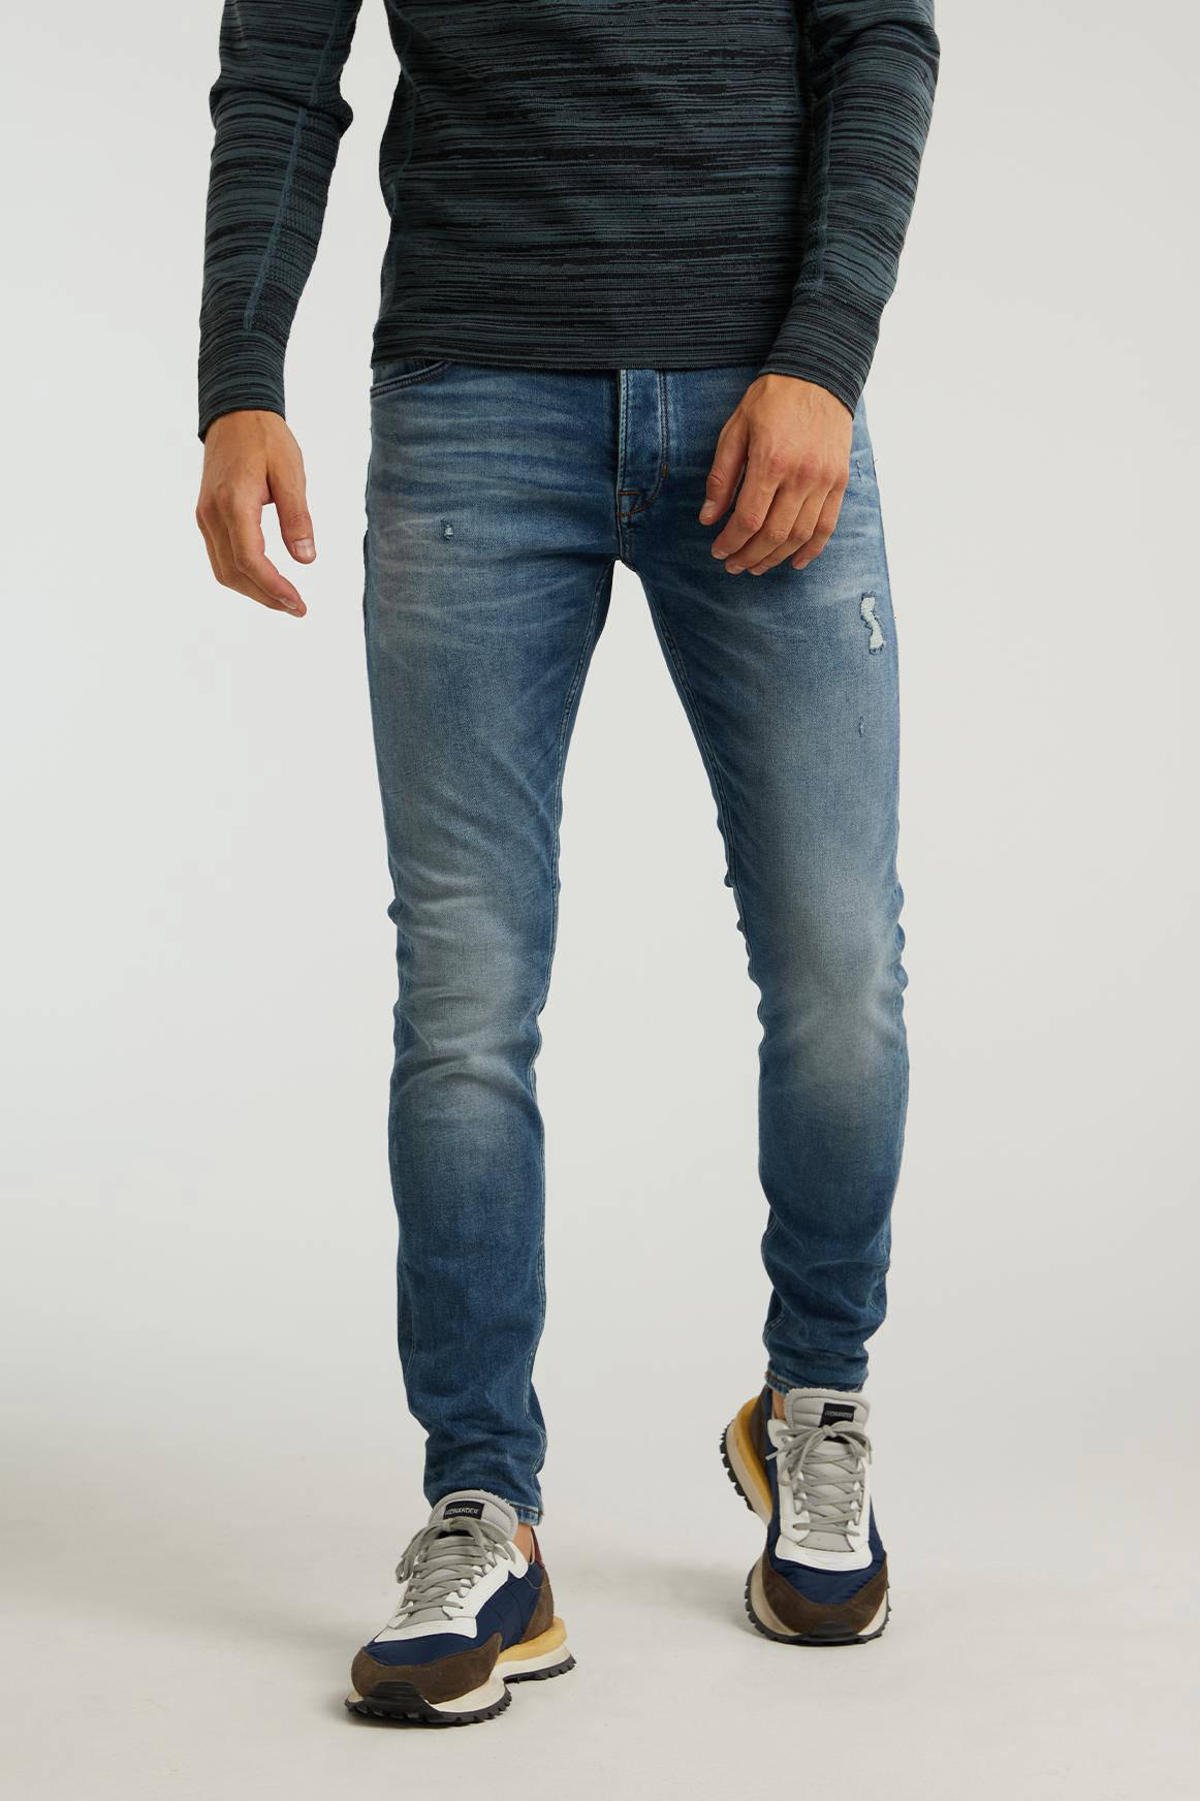 Associëren Tegenwerken Buitenshuis CHASIN' slim fit jeans Ego Noble light blue | wehkamp